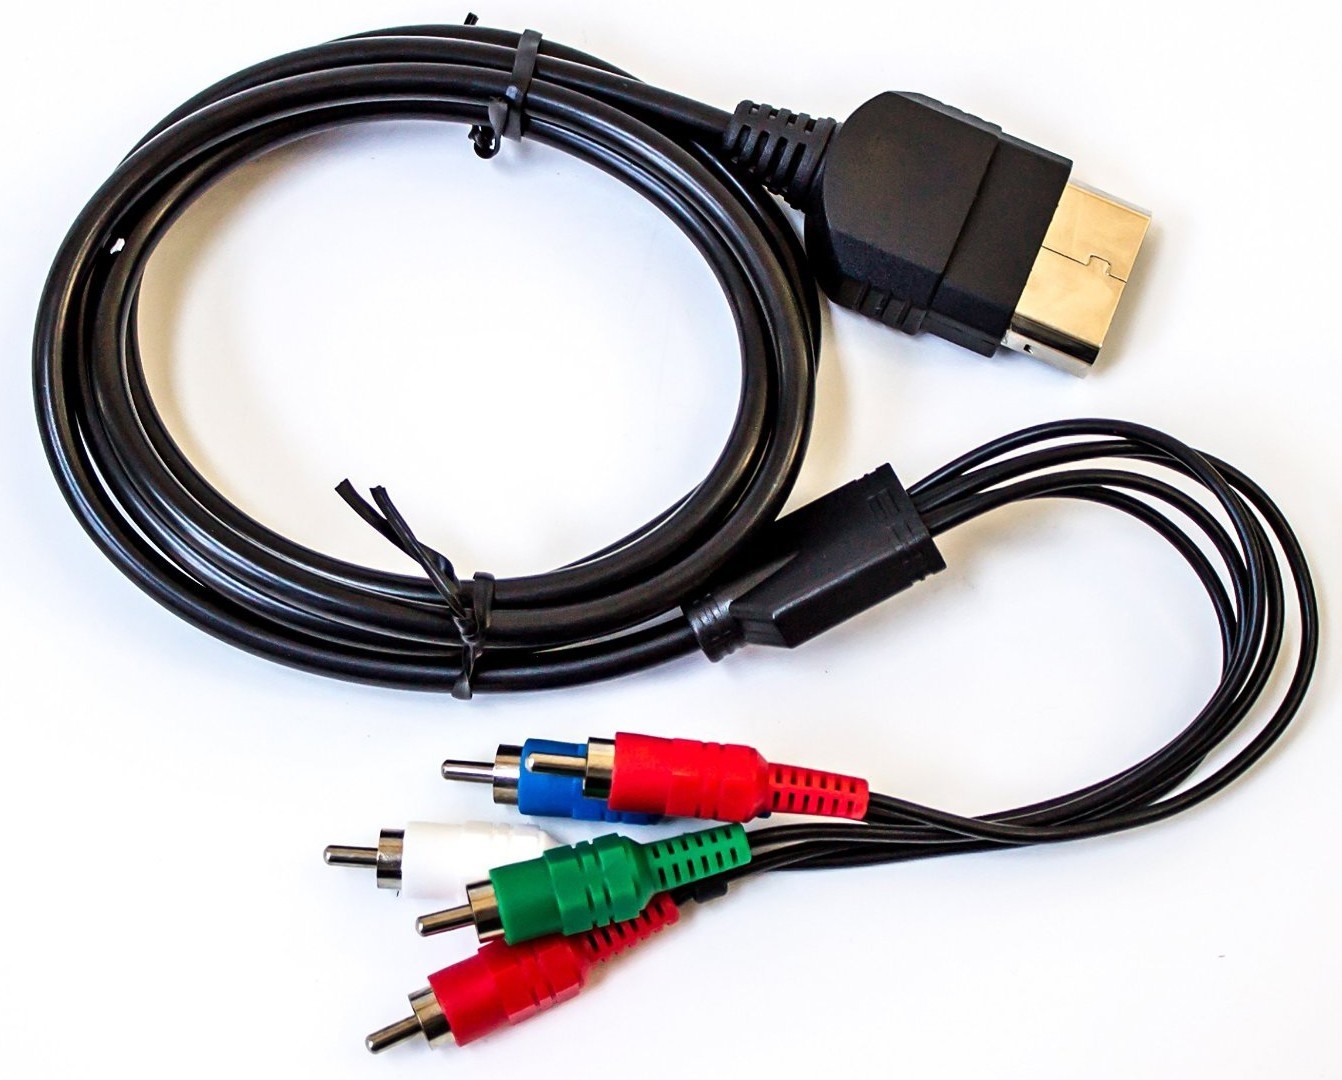 Component Cable for original XBOX (BULK) - XBOX -